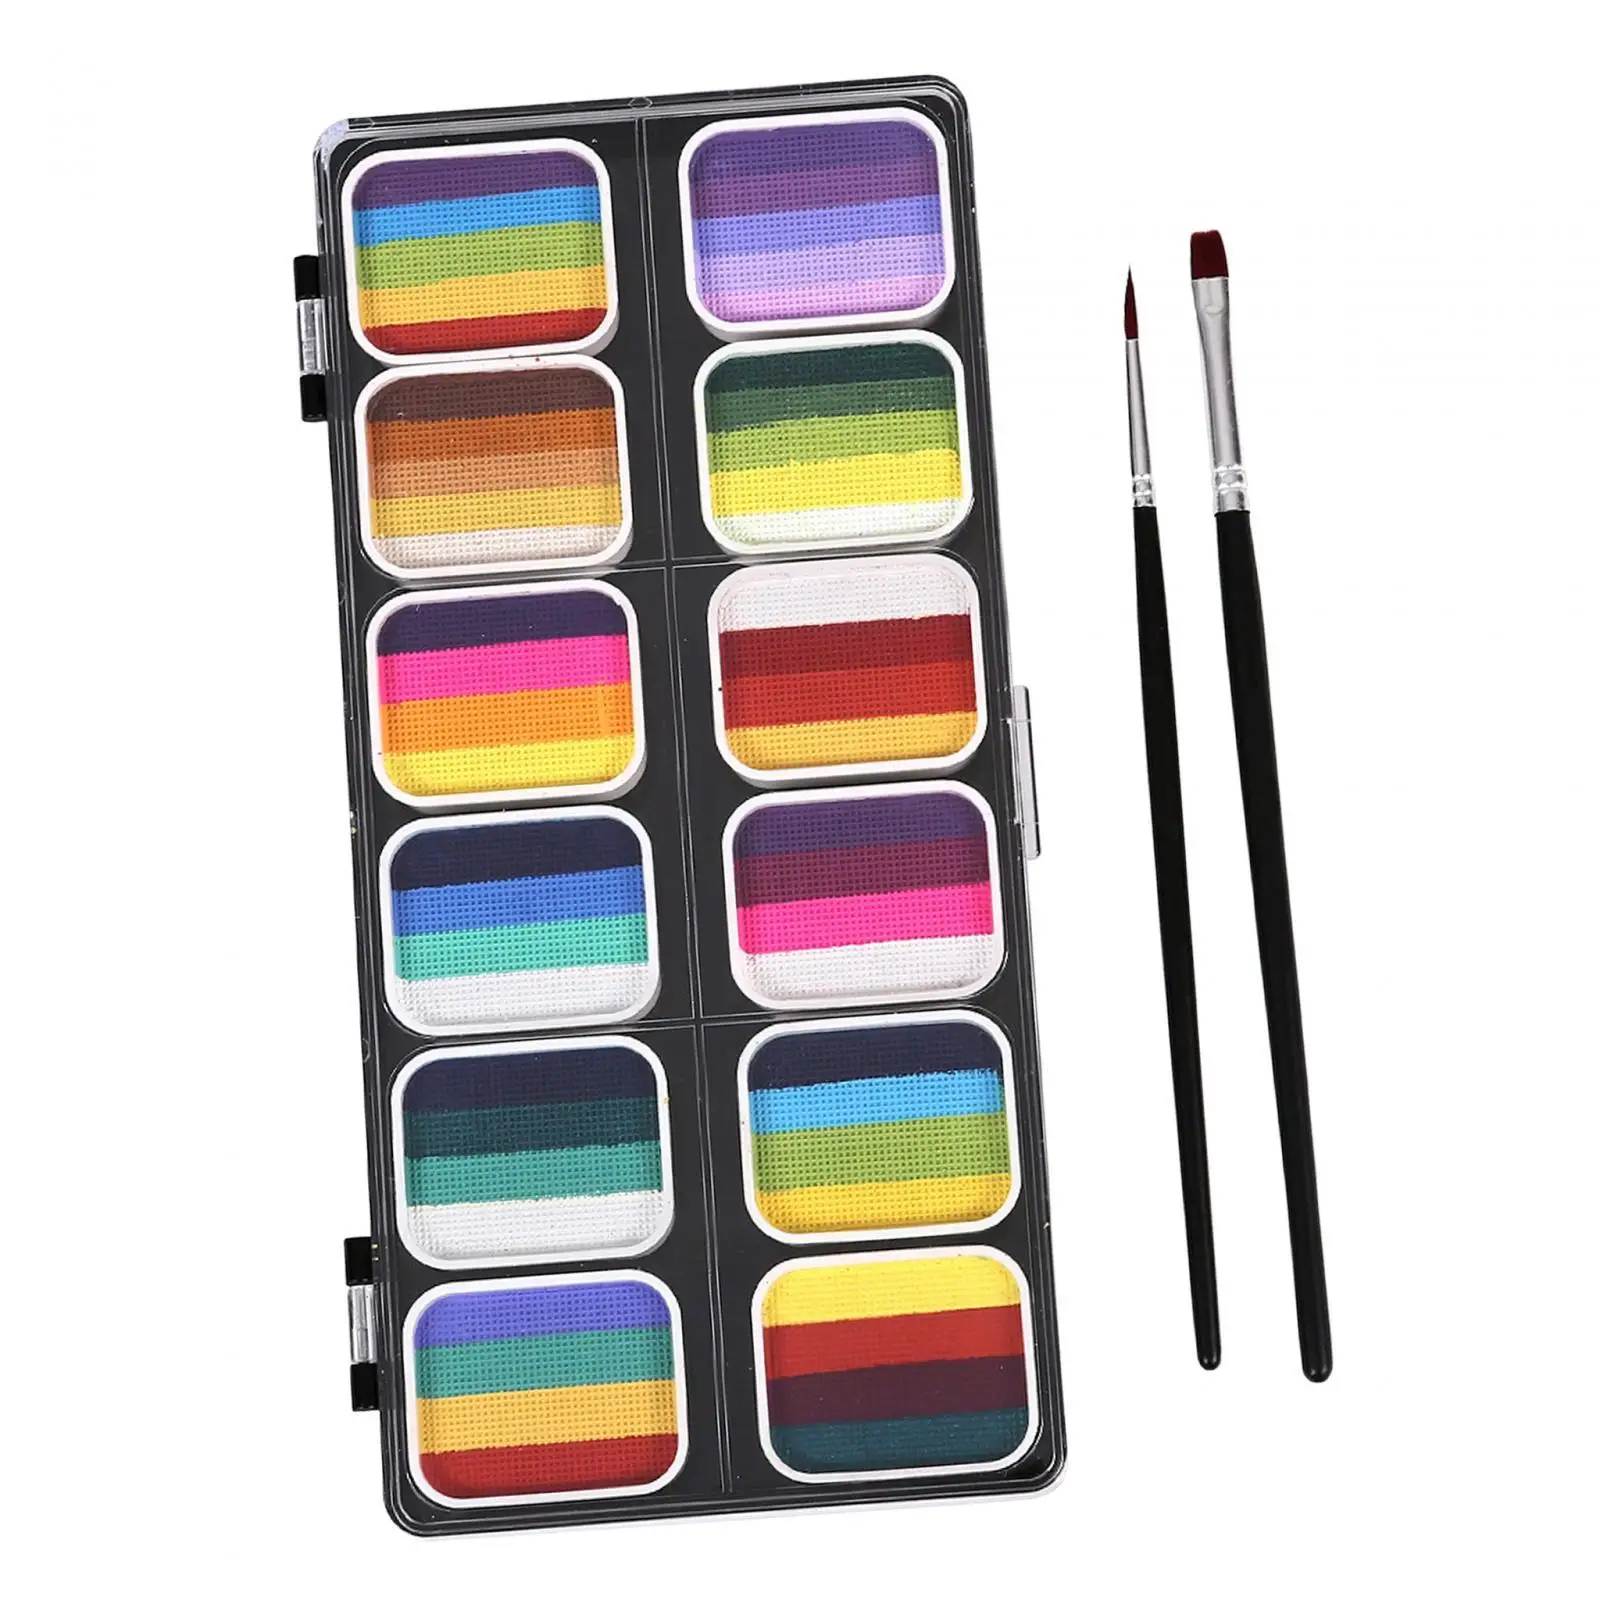 Face Paint Palette Makeup Kit 12 Water based Paints for Kid Adult Practical Professional Face Painting Set Washable